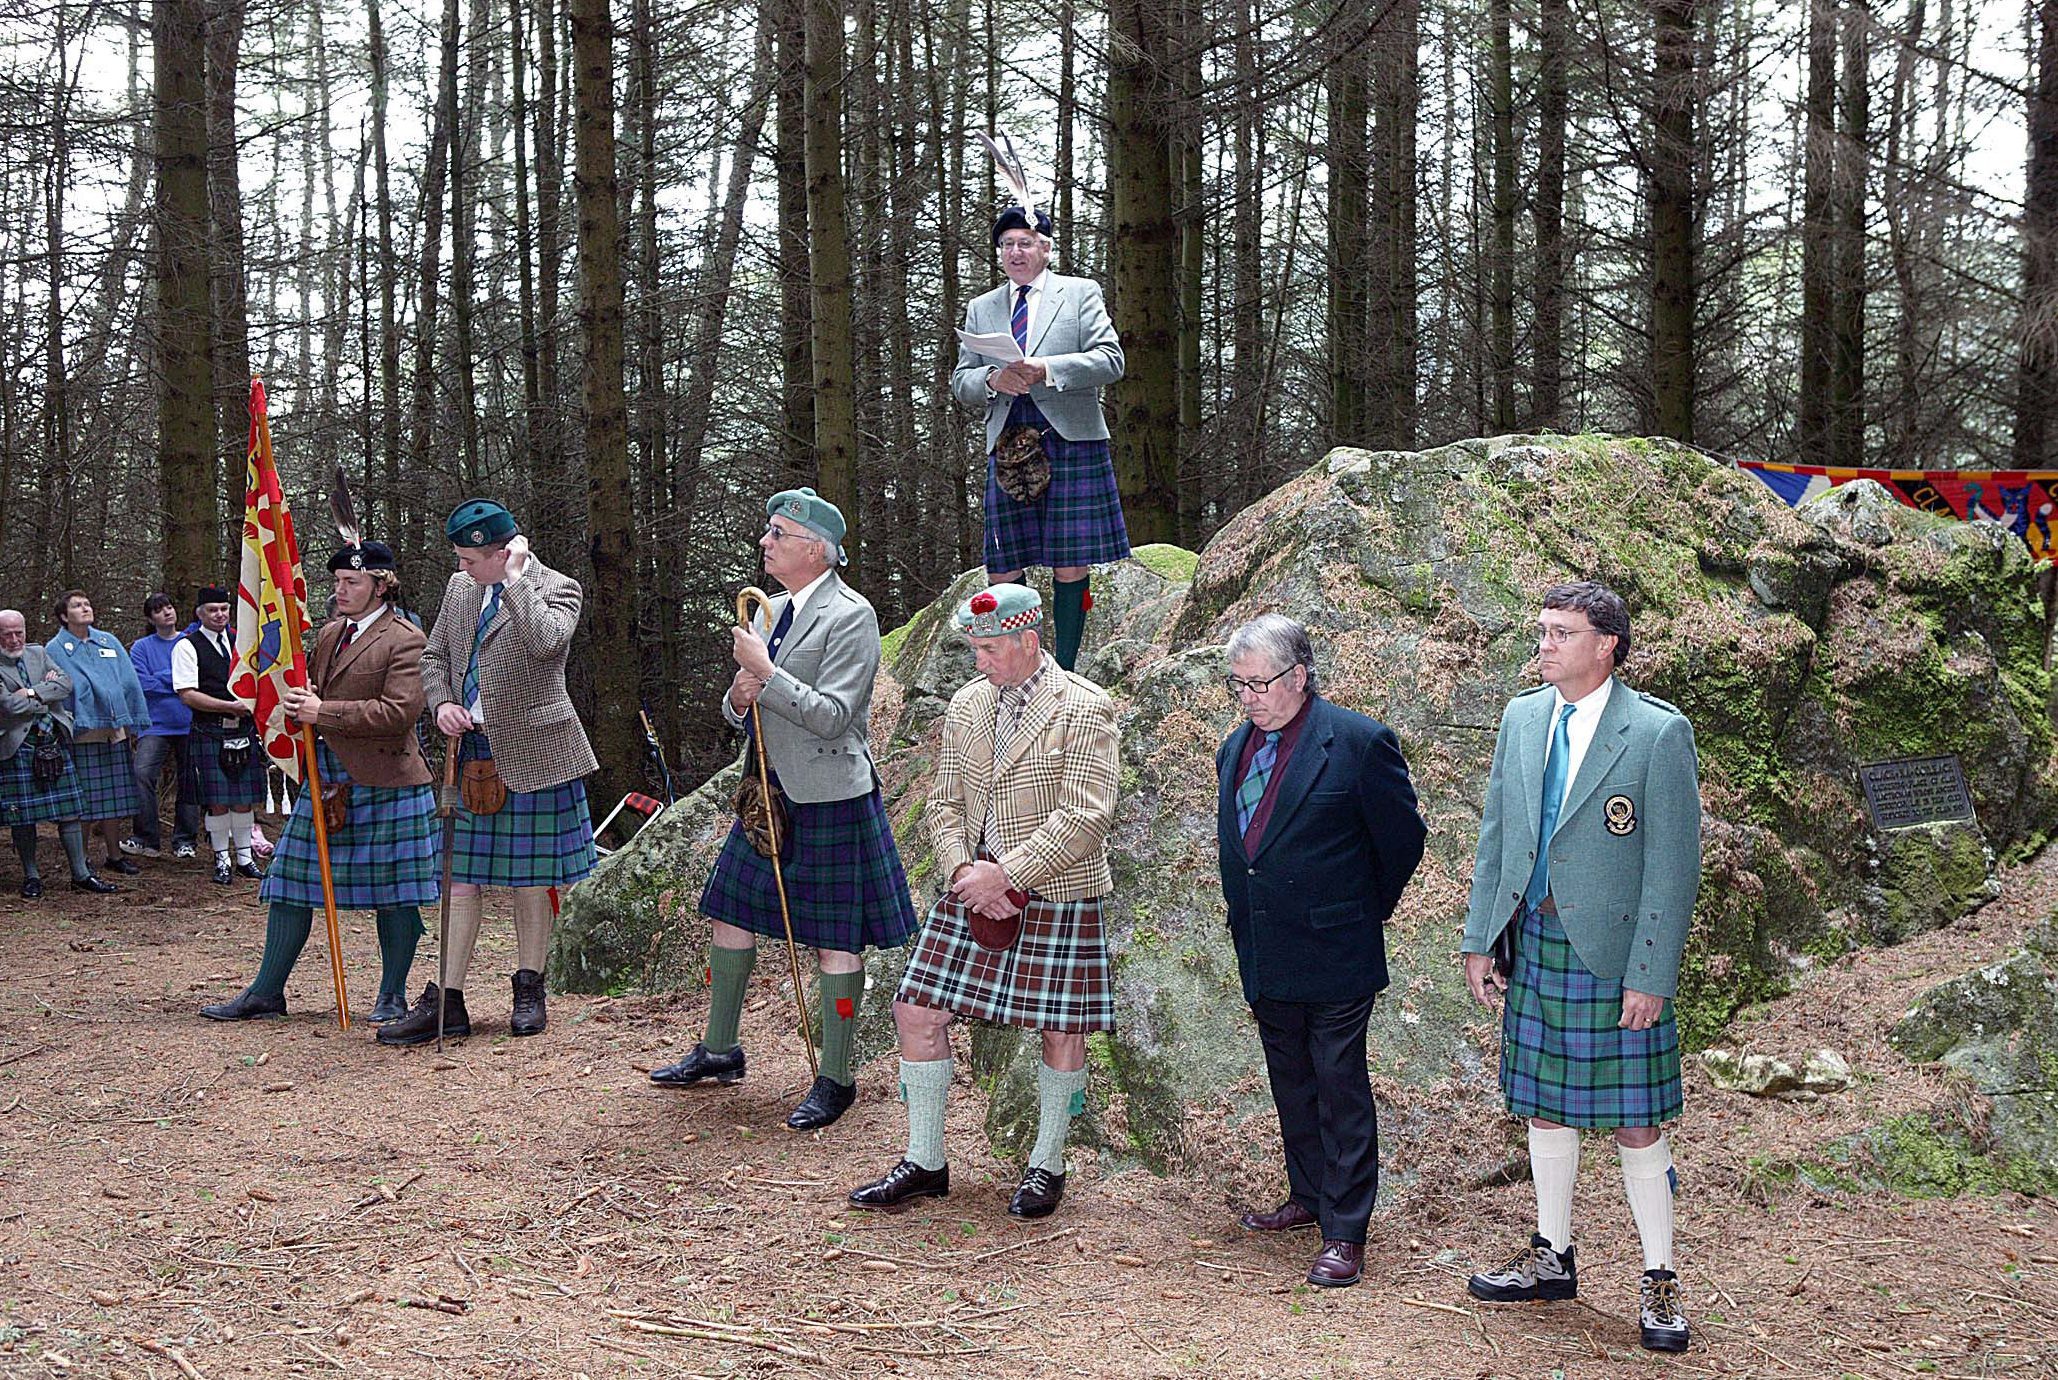 A previous Clan MacThomas gathering in Glenshee.